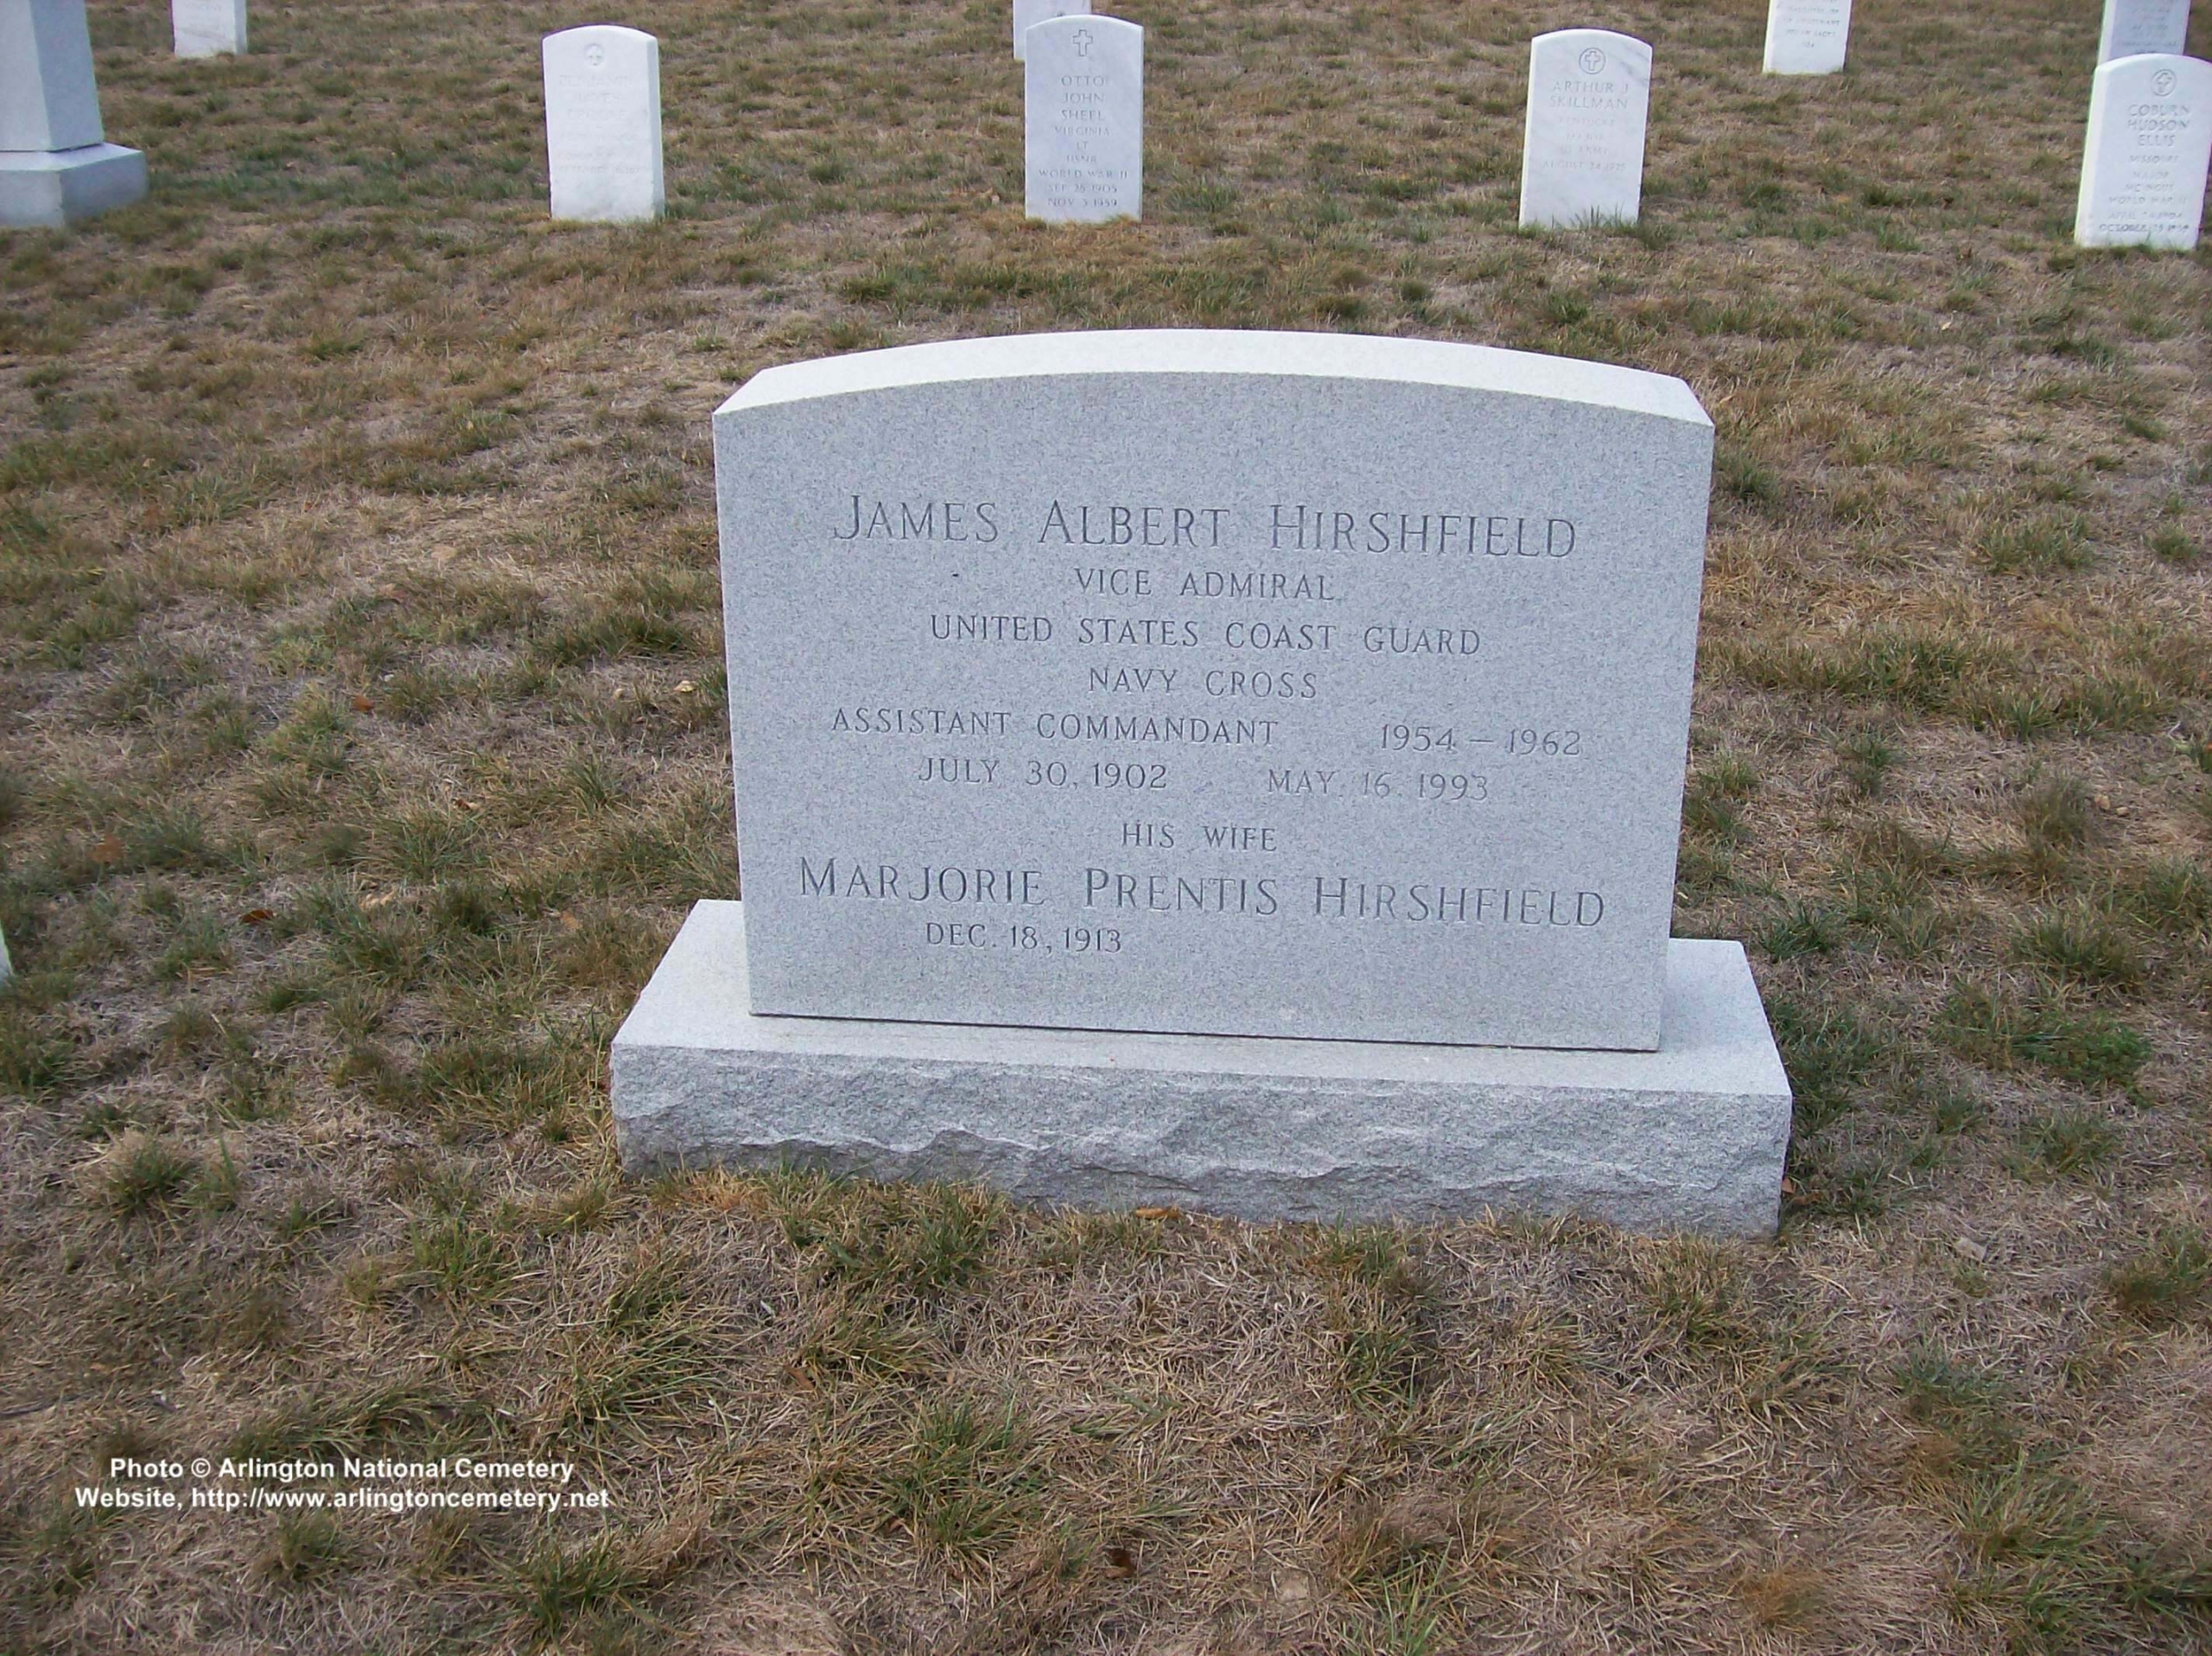 jahirshfield-gravesite-photo-october-2007-001